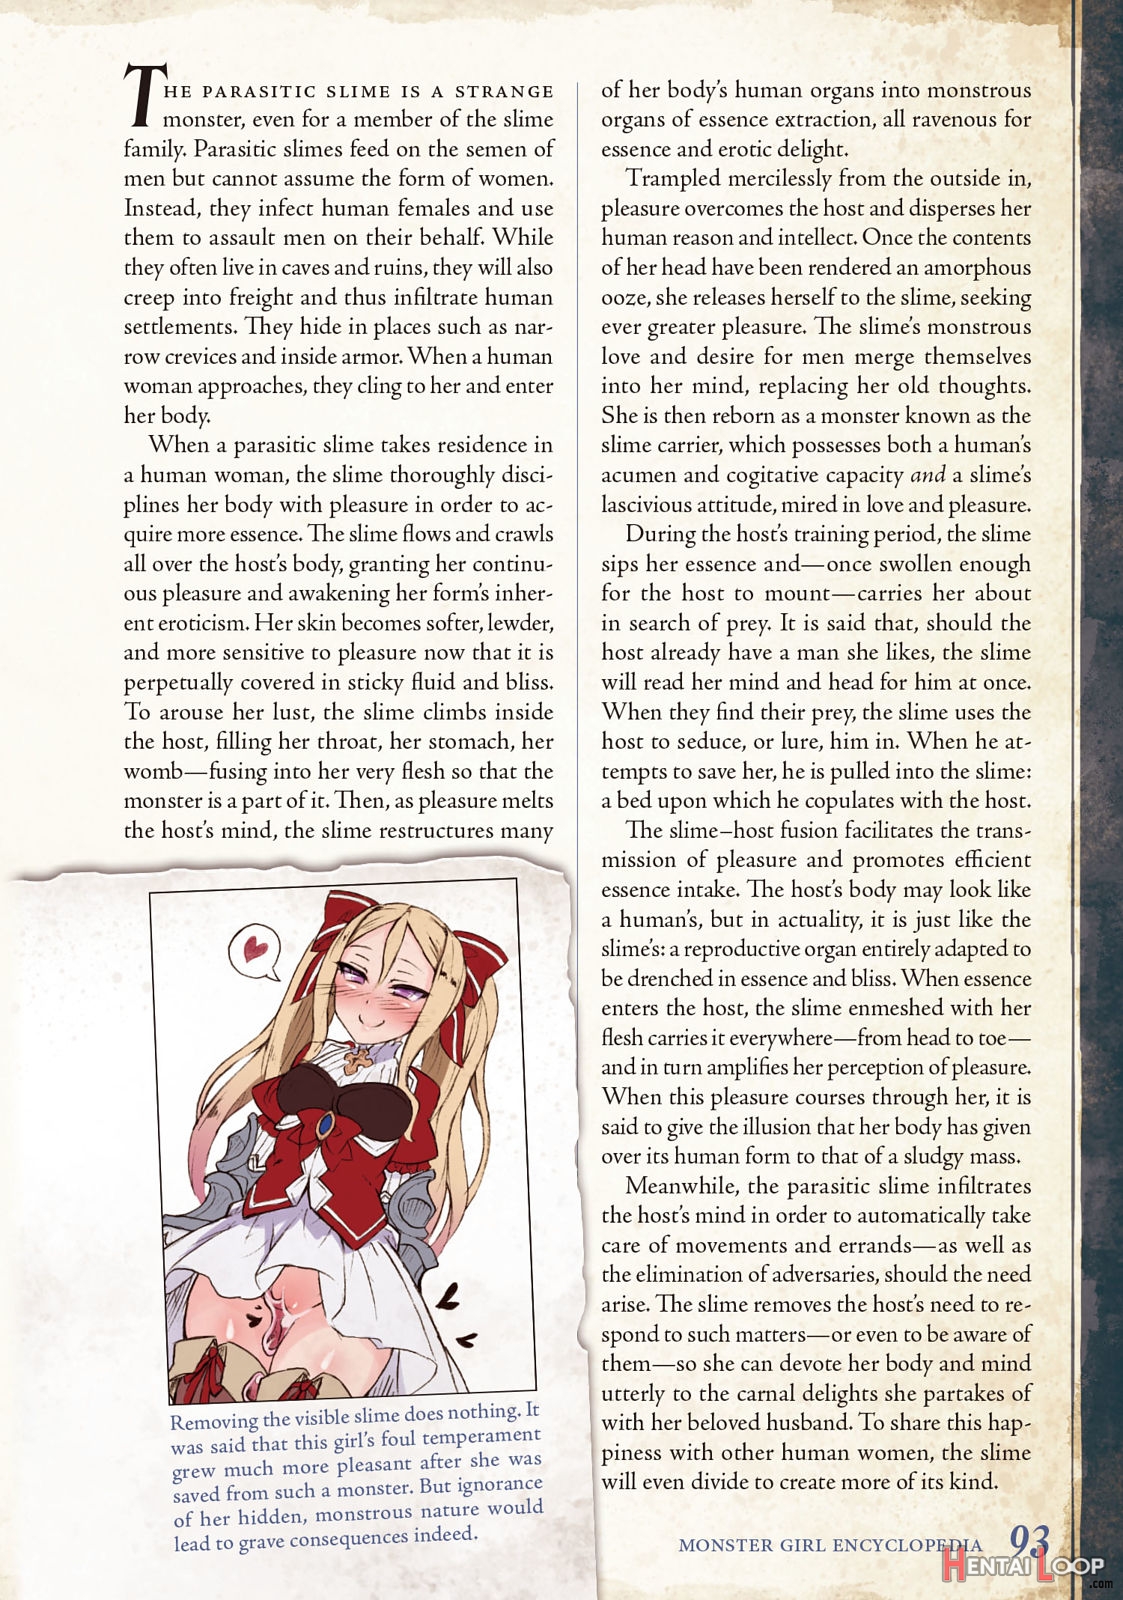 Monster Girl Encyclopedia Vol. 2 page 94